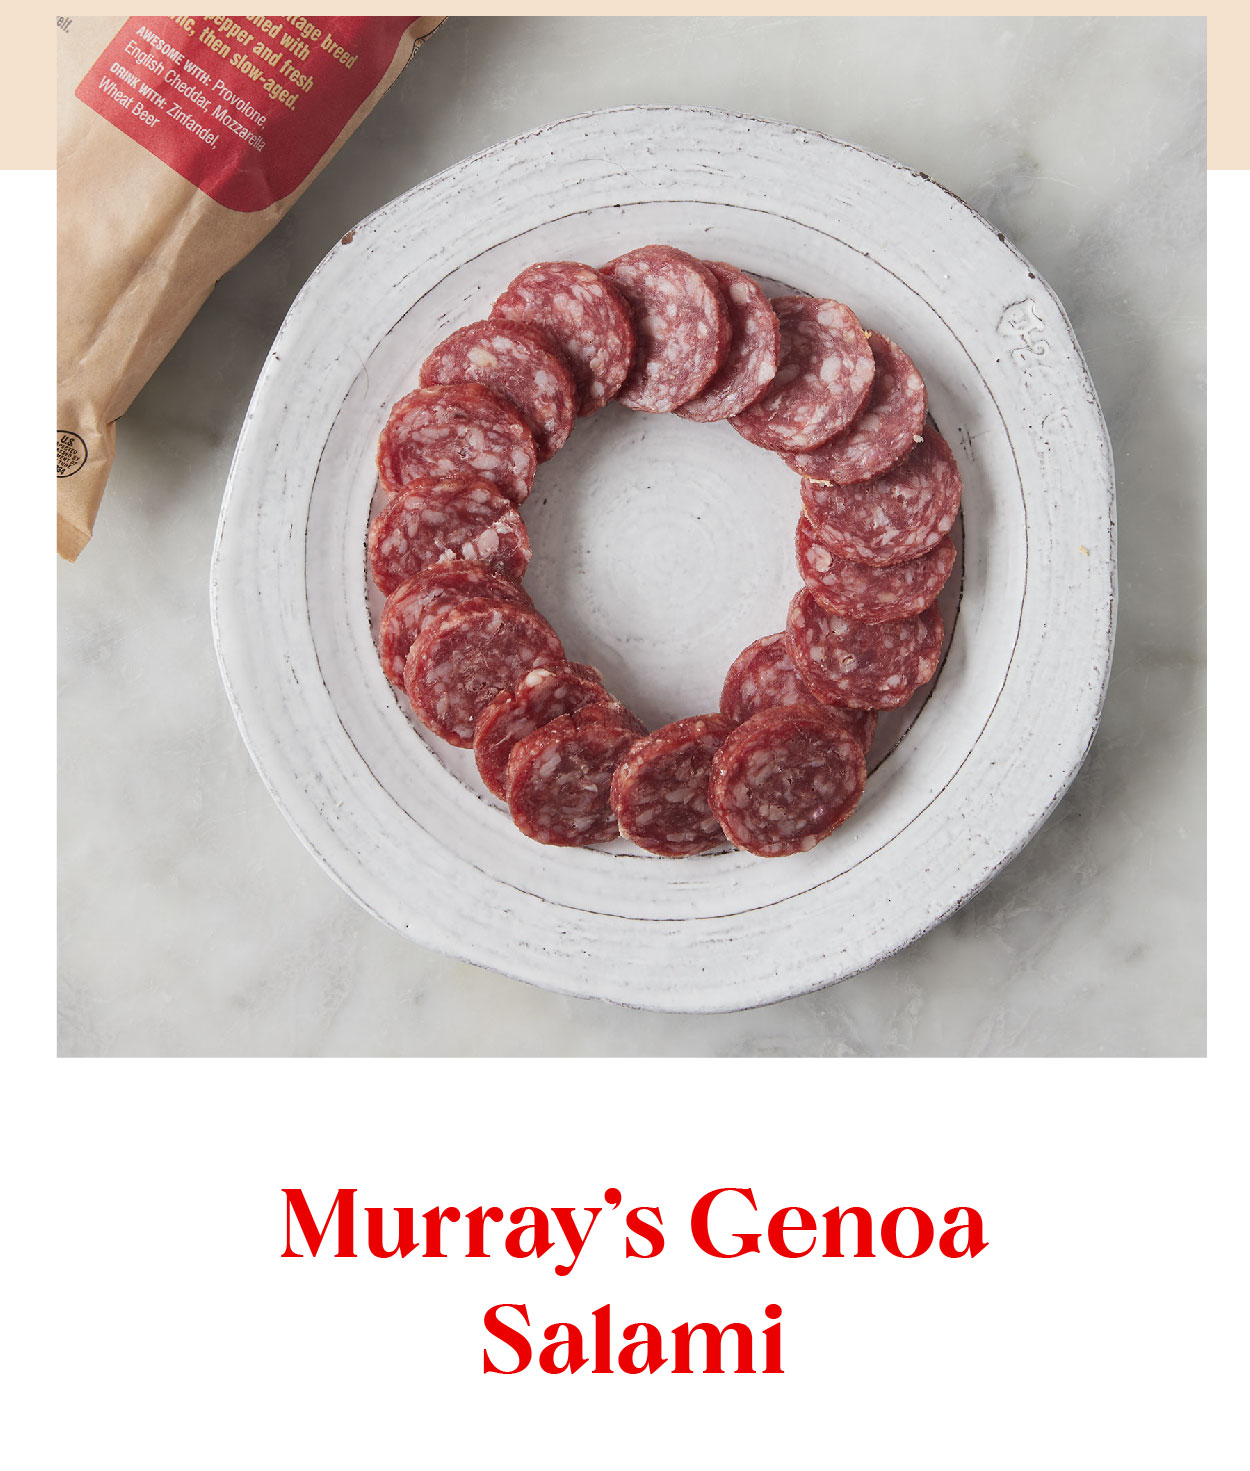 Murray's Genoa Salami